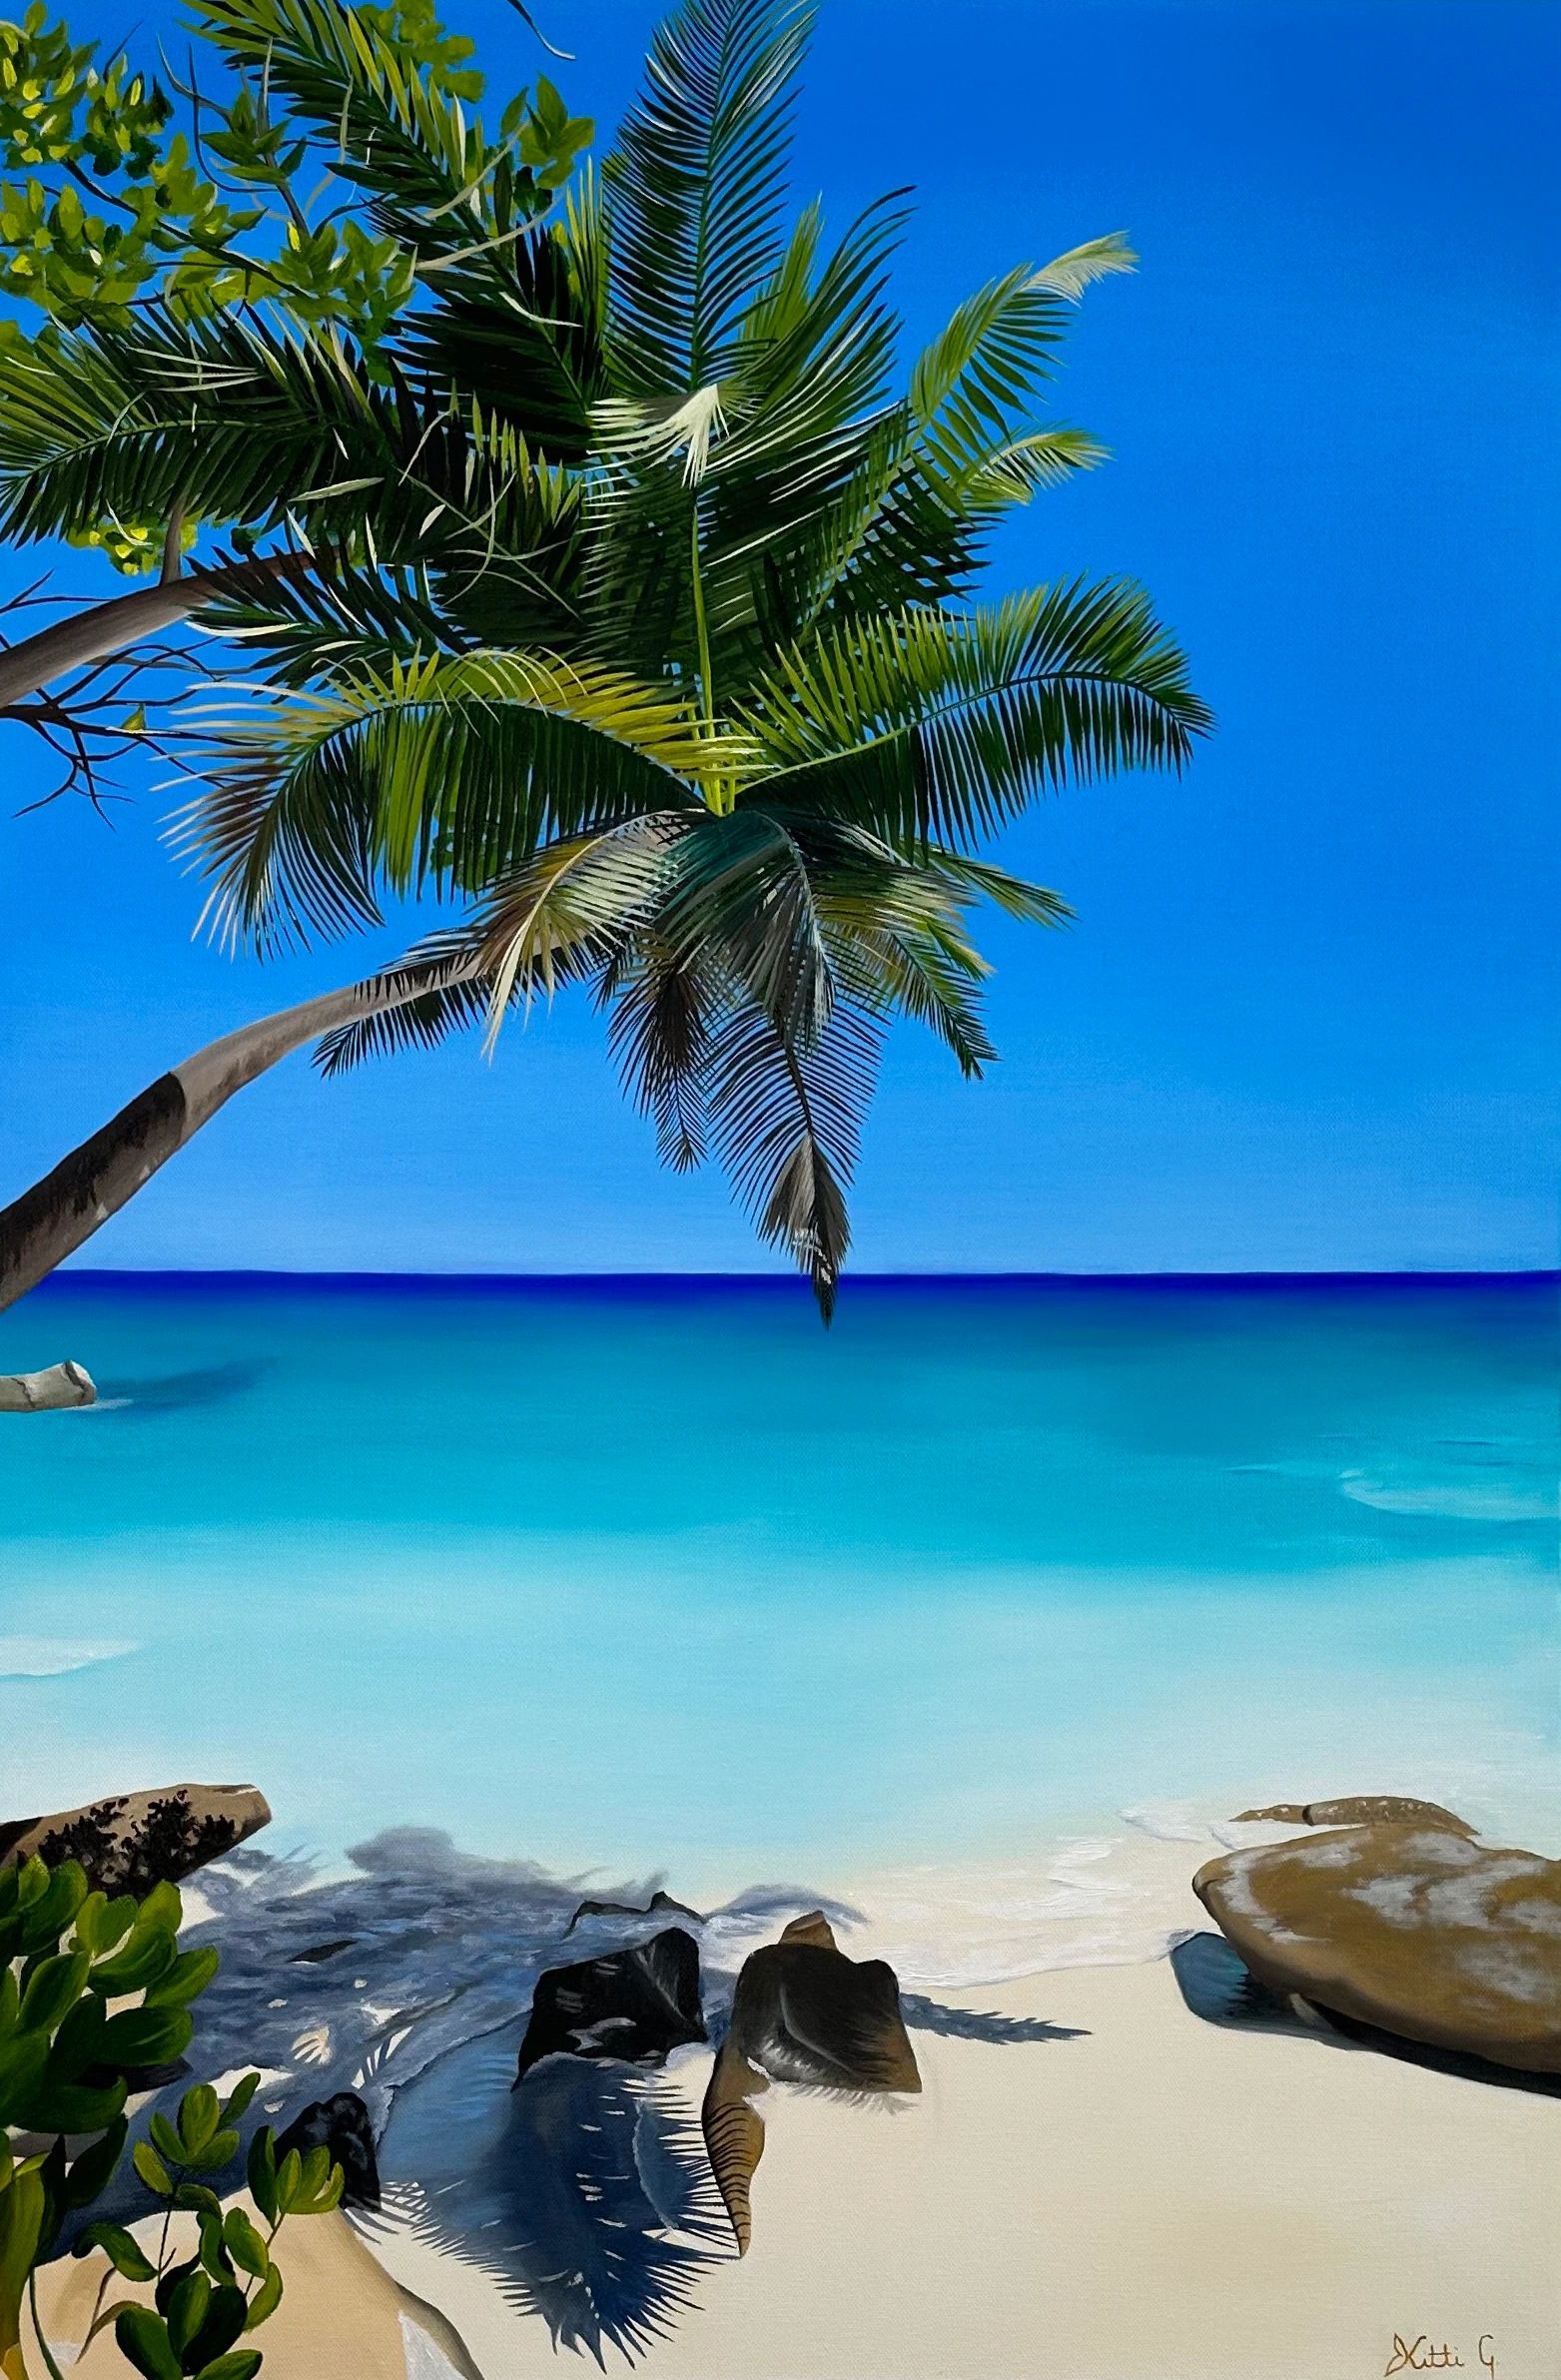 Beach, palm tree, sand, turquoise ocean